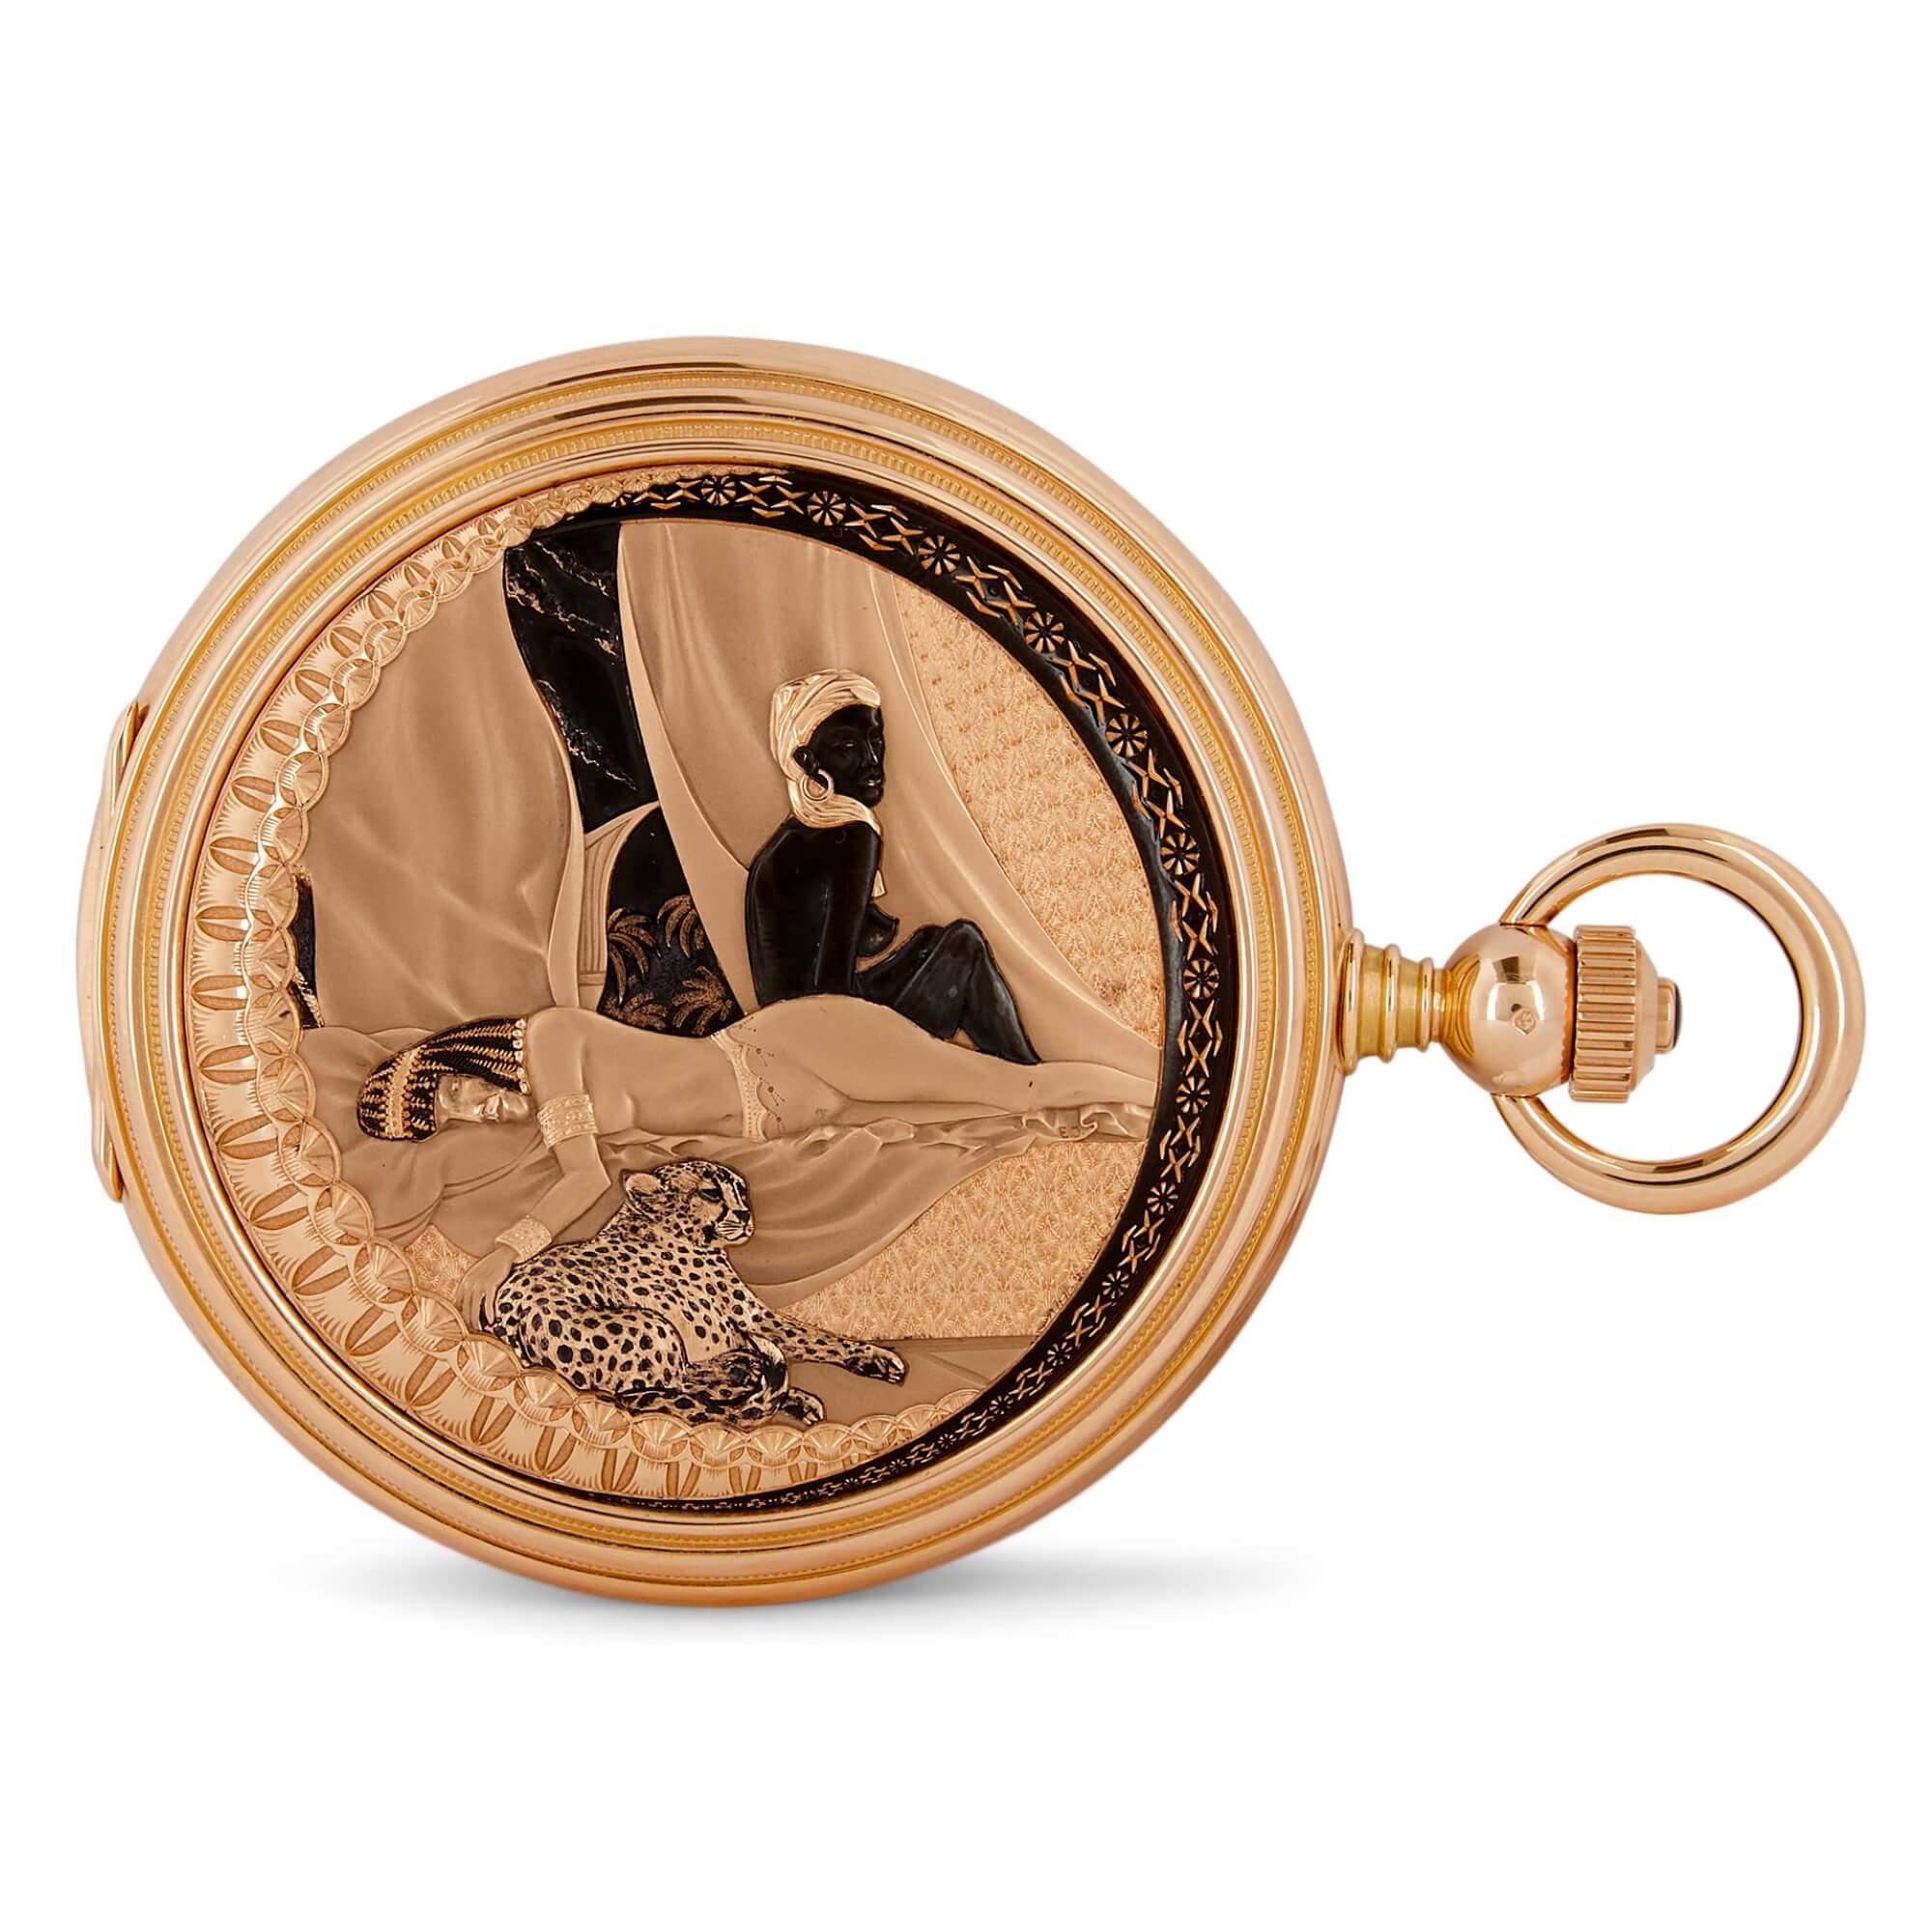 Swiss Parmigiani Fleurier, 'Nubia', Extremely Fine, Unique 18k Pink Gold Pocket Watch For Sale